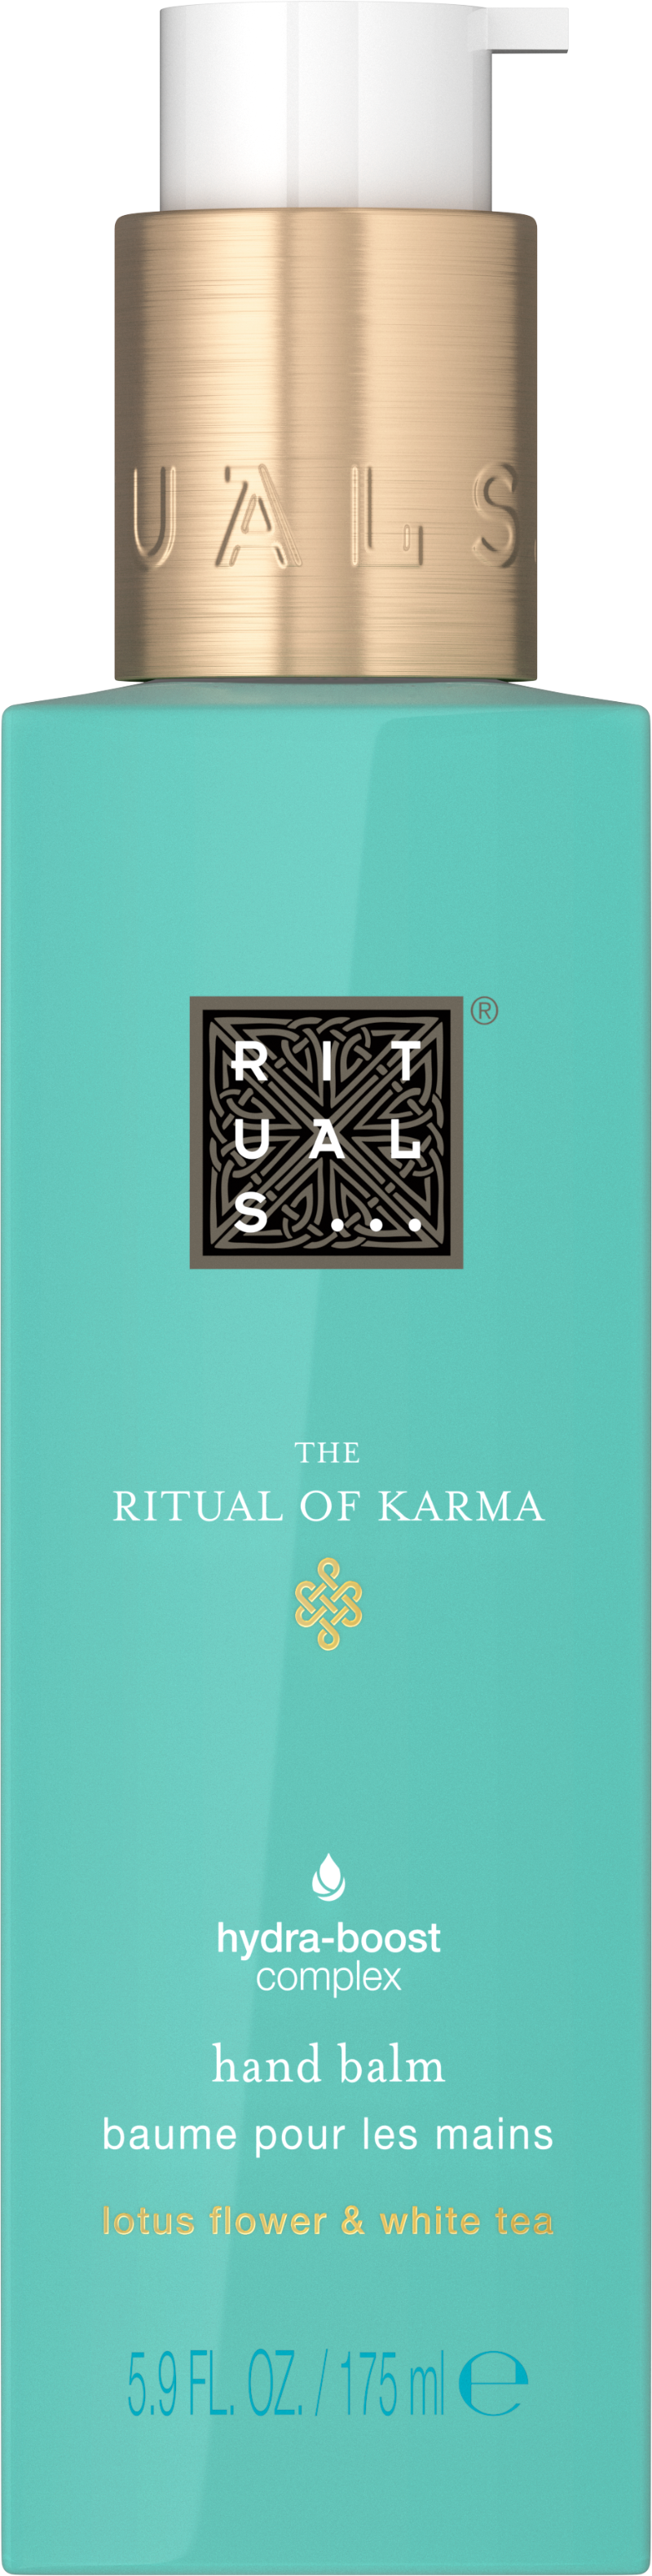 Rituals The Ritual of Karma Hand Wash 300 ml